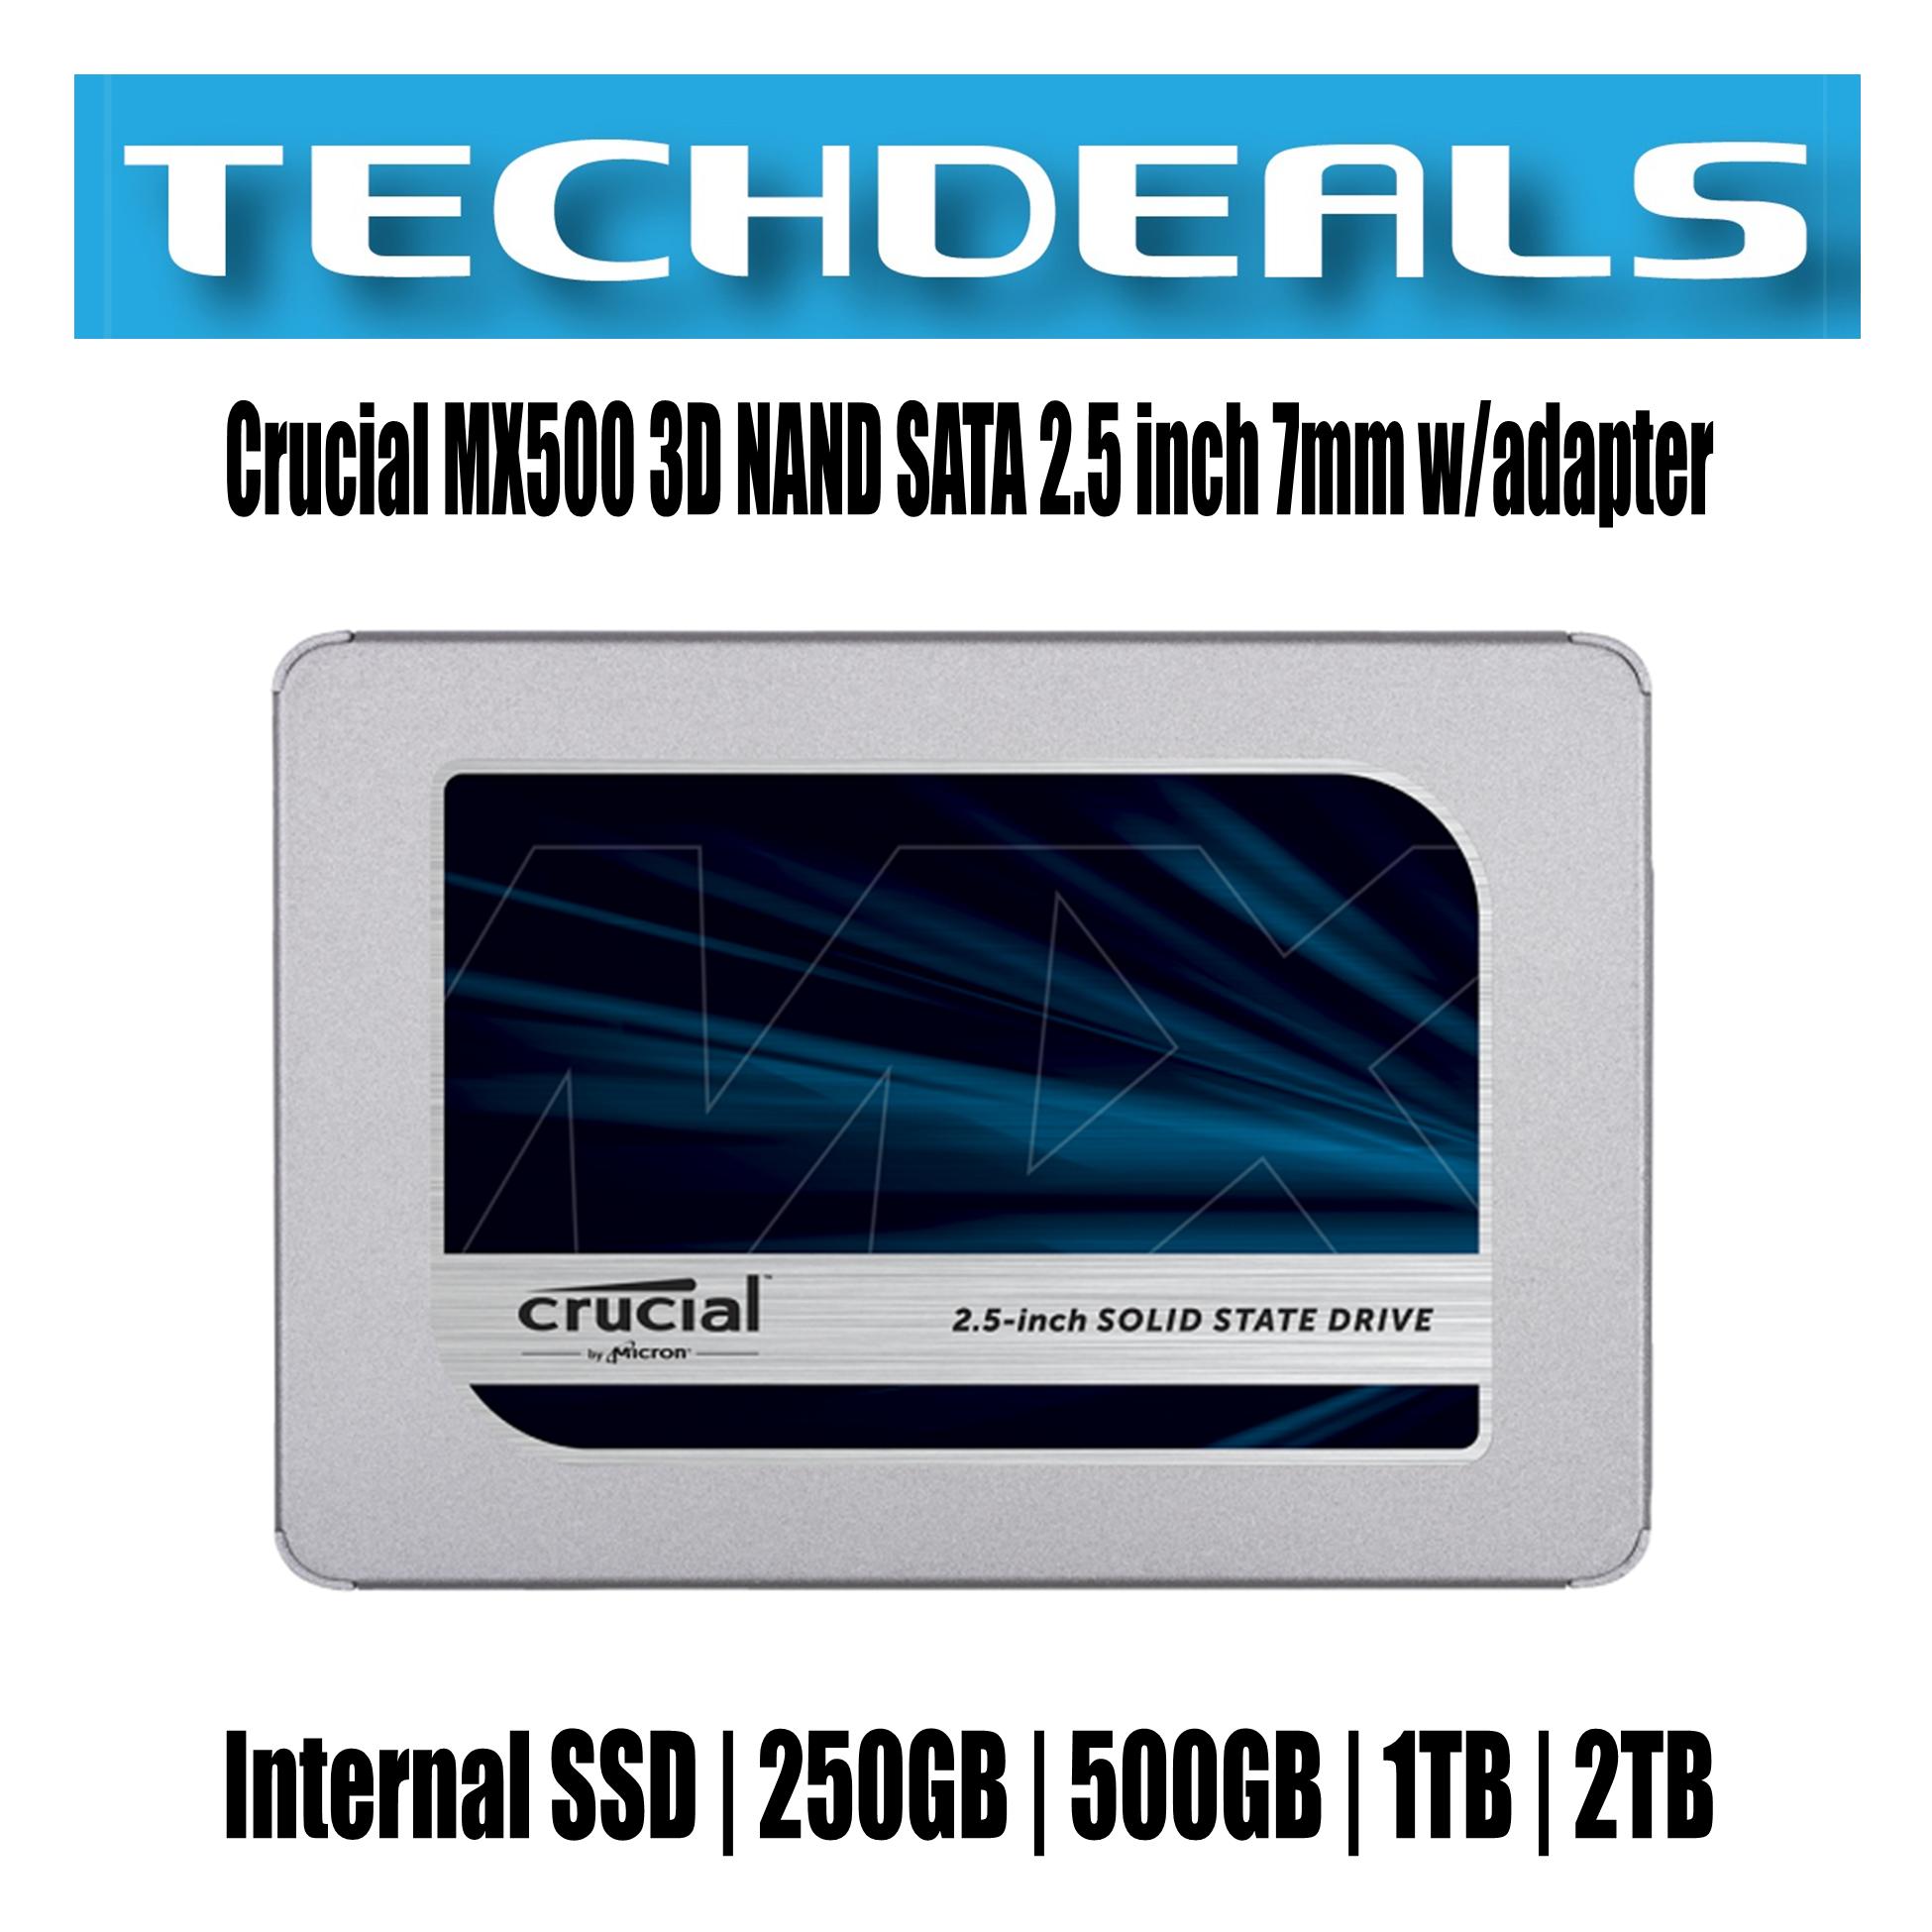 Crucial MX500 3D NAND SATA 2.5 inch (with 9.5mm adapter) Internal SSD 250GB | 500GB | 1TB 2TB | Lazada Singapore